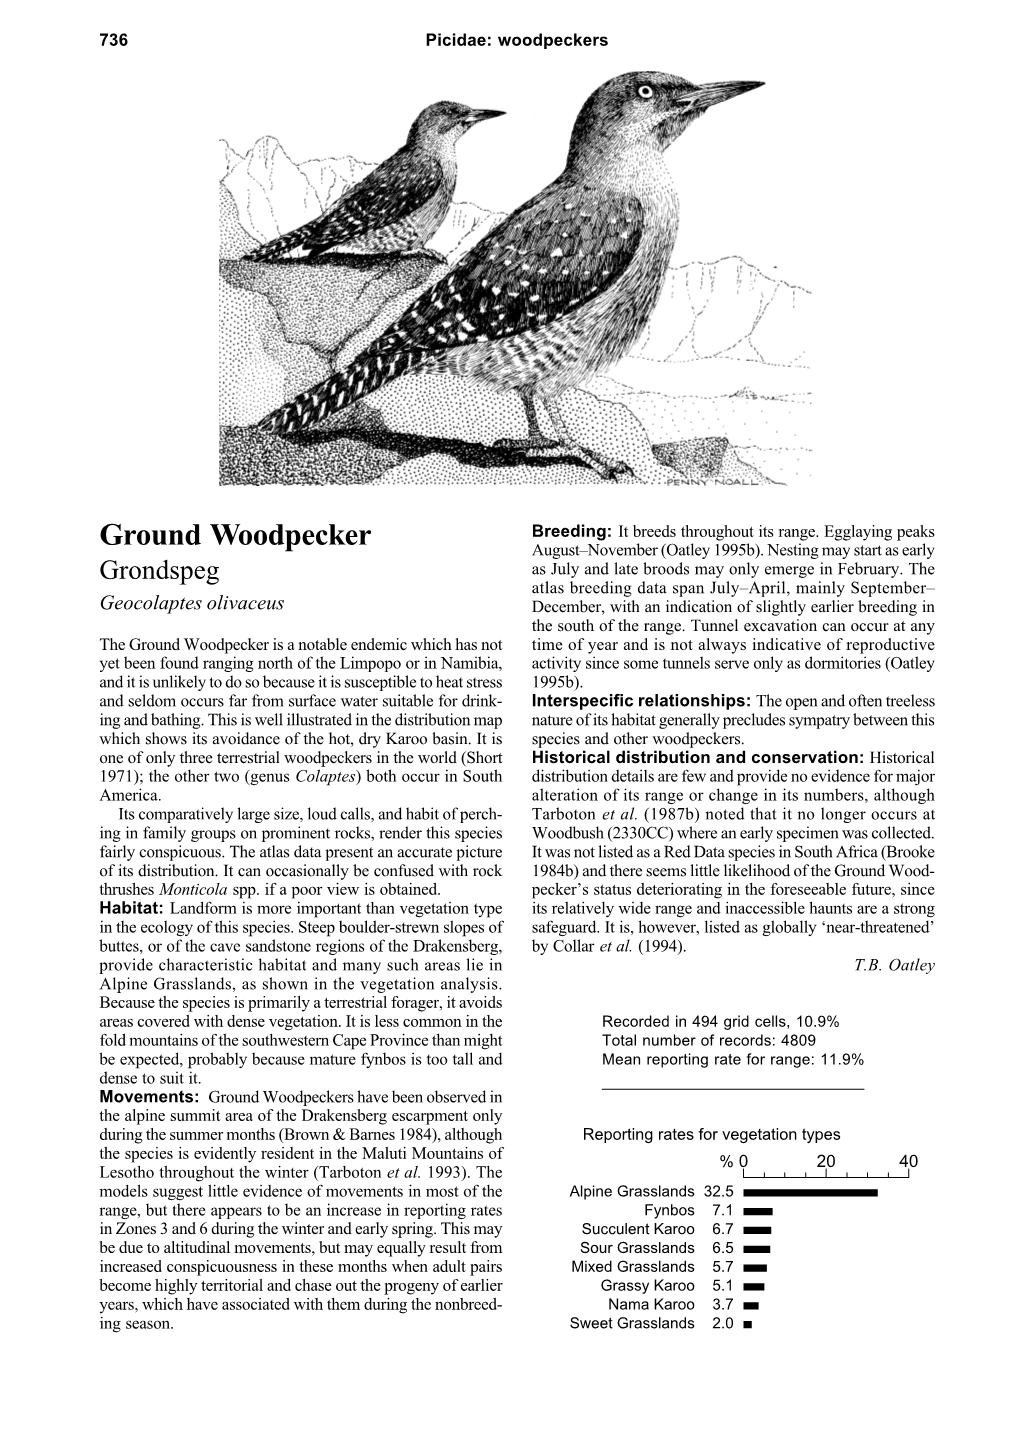 Ground Woodpecker August–November (Oatley 1995B)